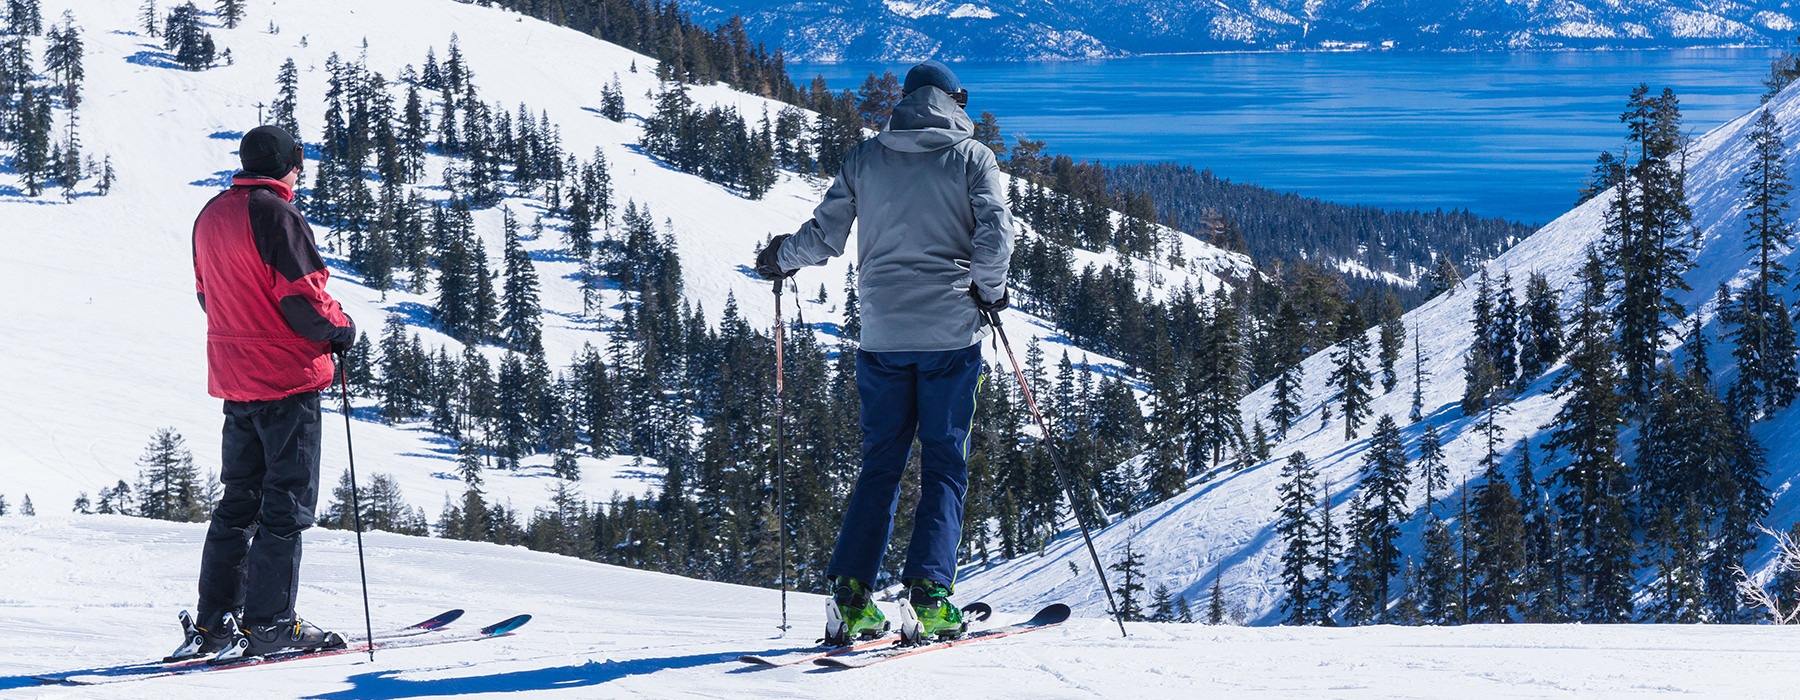 Couple out skiing on freshly powdered slopes